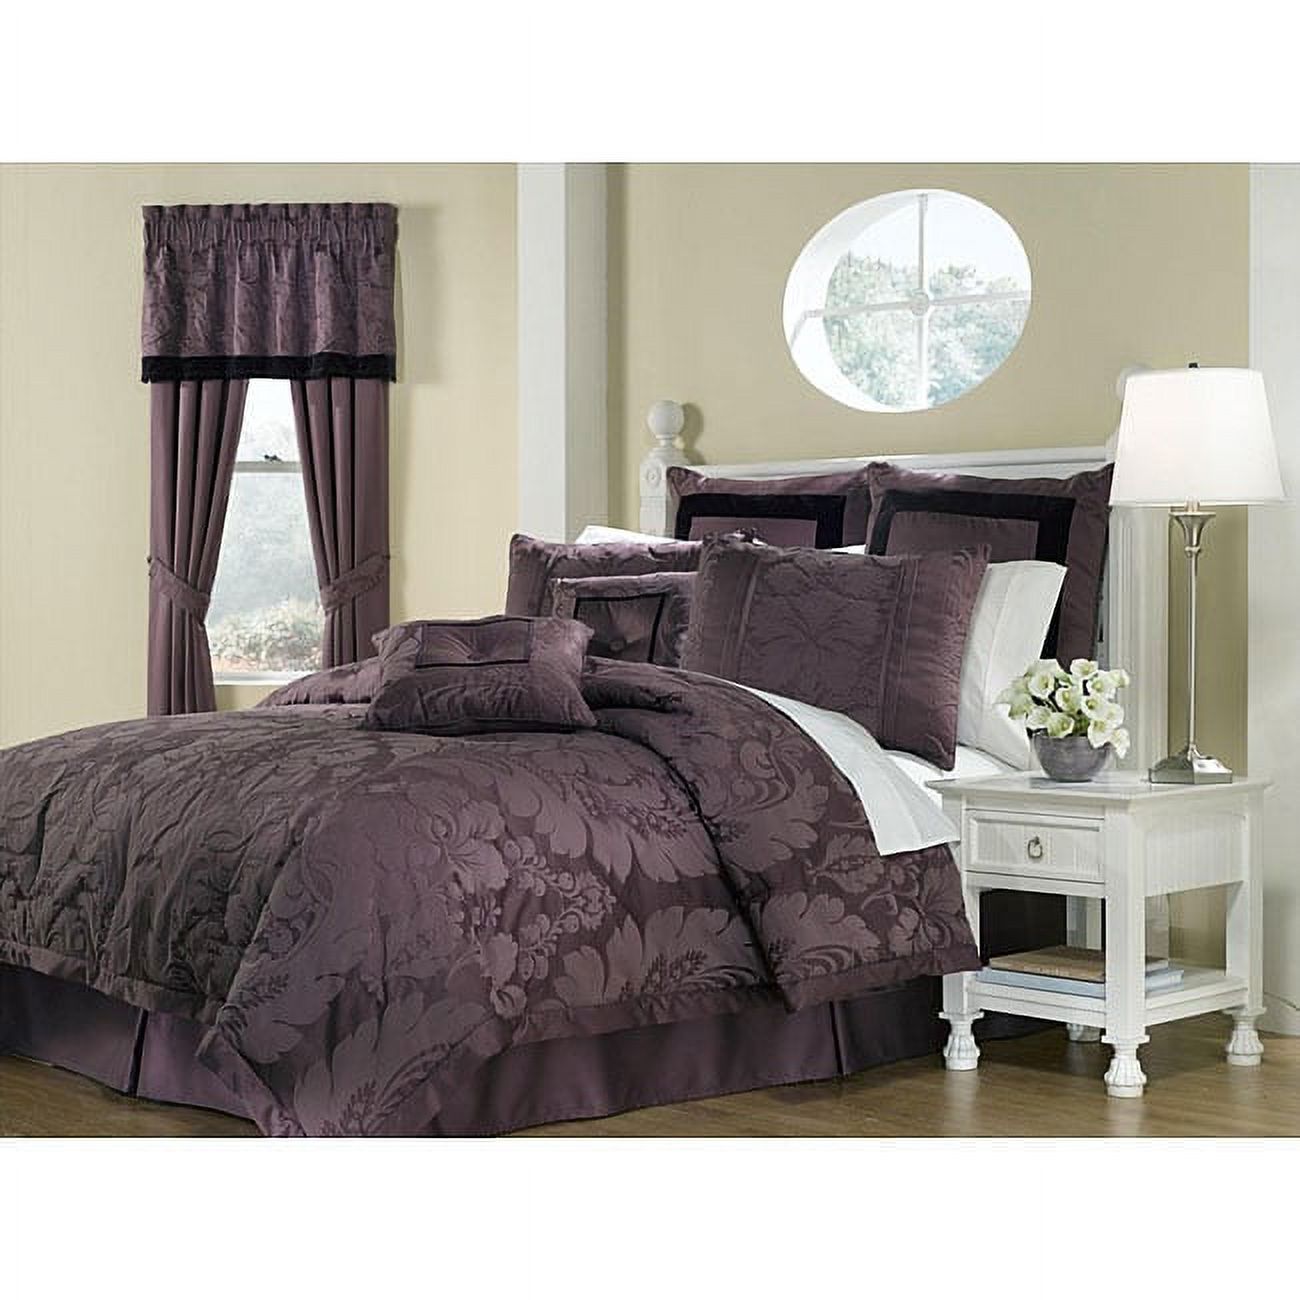 Royal Heritage Home Lorenzo Purple 8-piece Queen-size Comforter Set - image 1 of 1